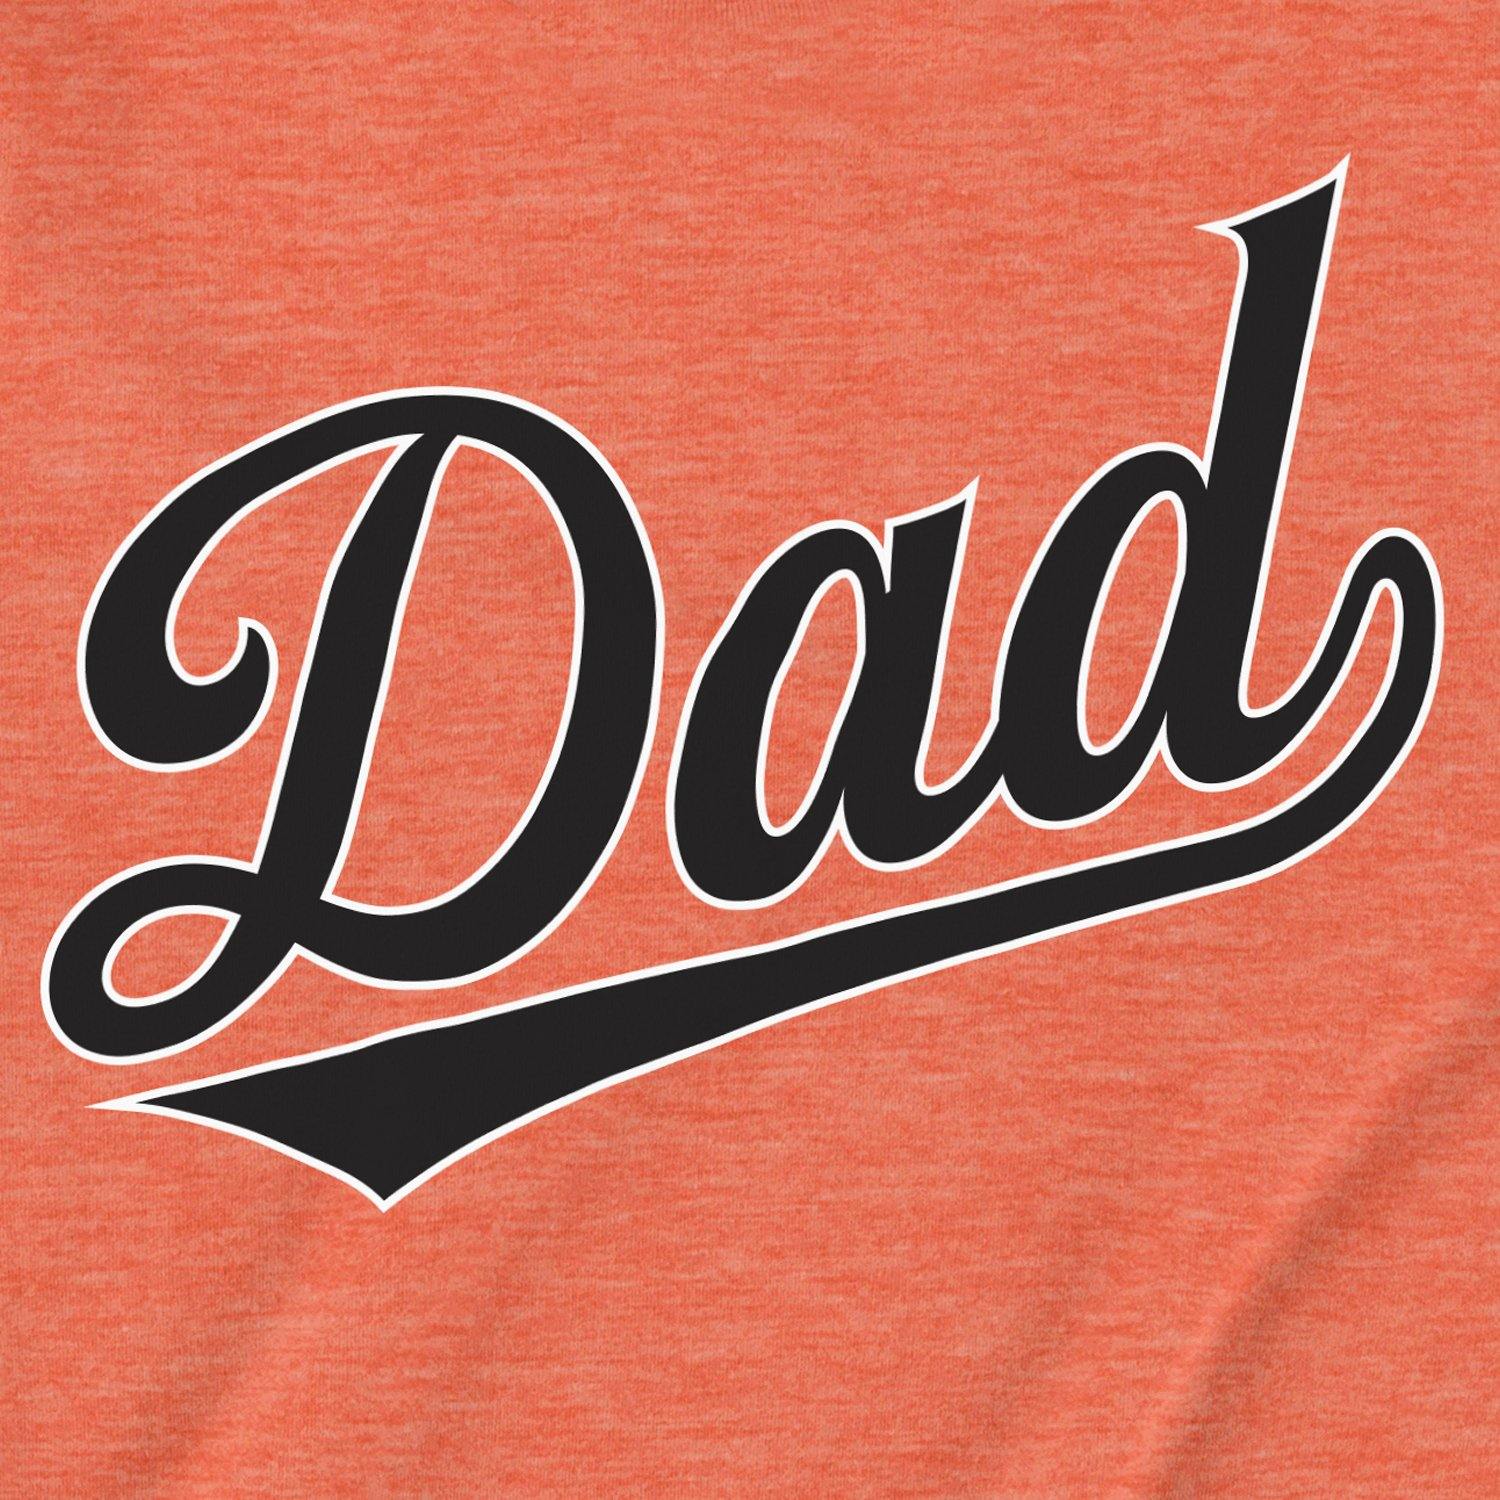 Dad | T-Shirt - Jomboy Media